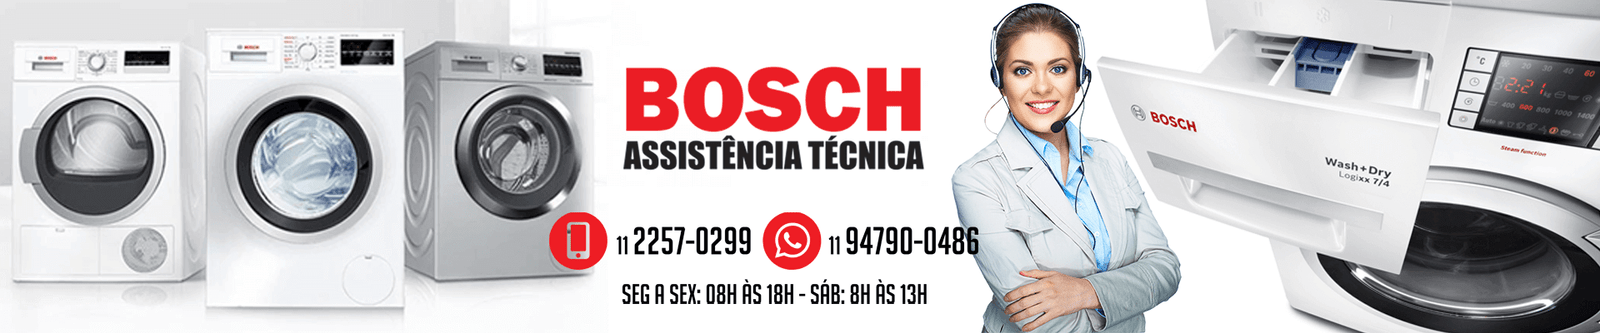 Bosch assistencia tecnica sp